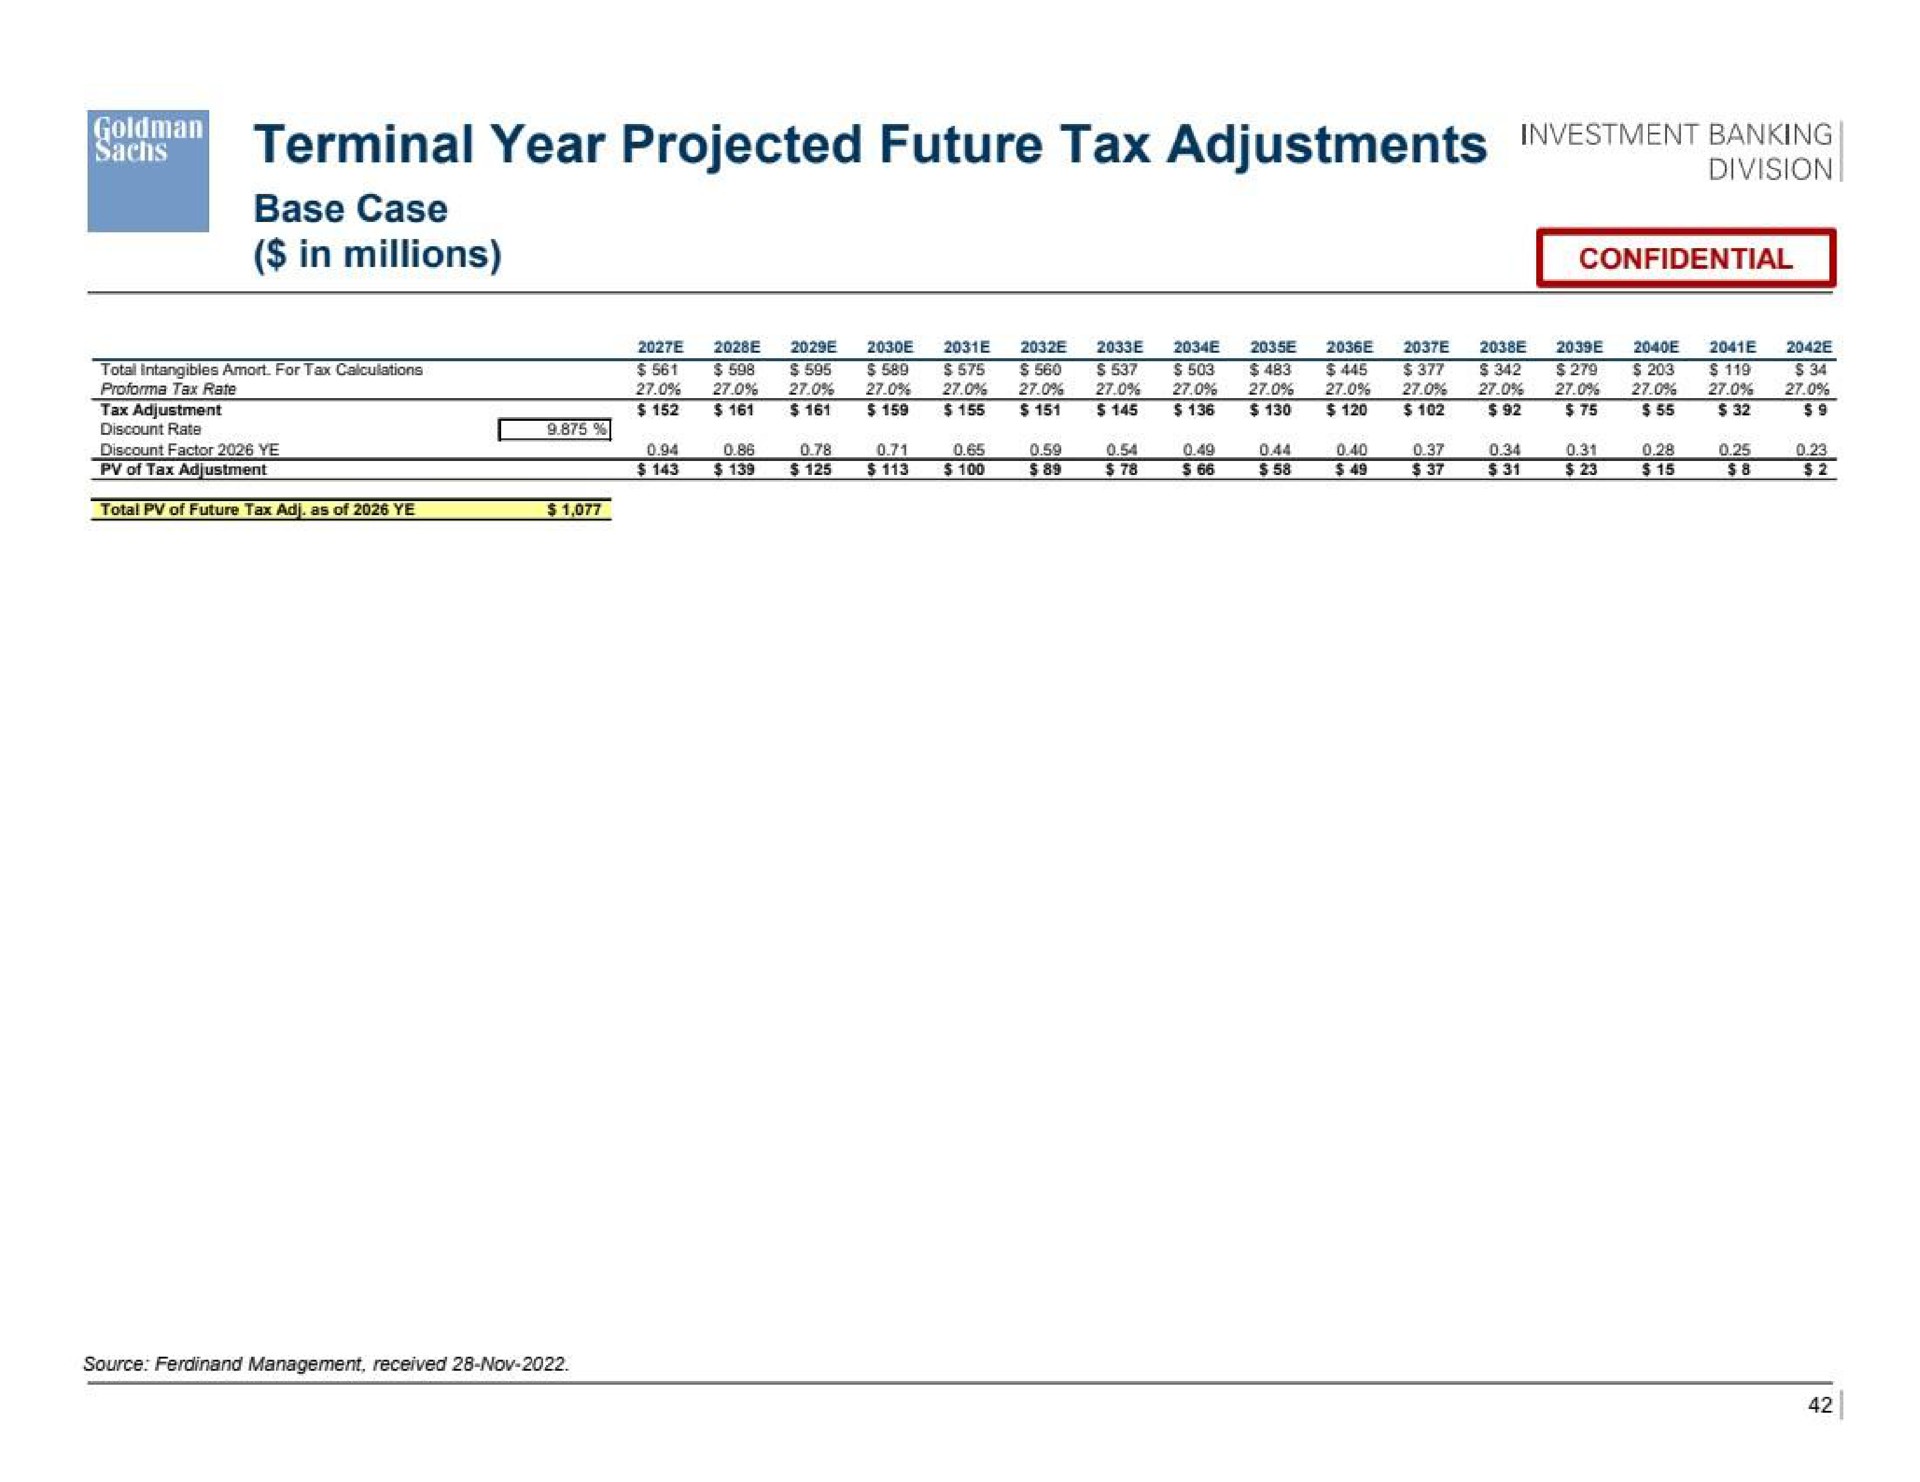 terminal year projected future tax adjustments | Goldman Sachs